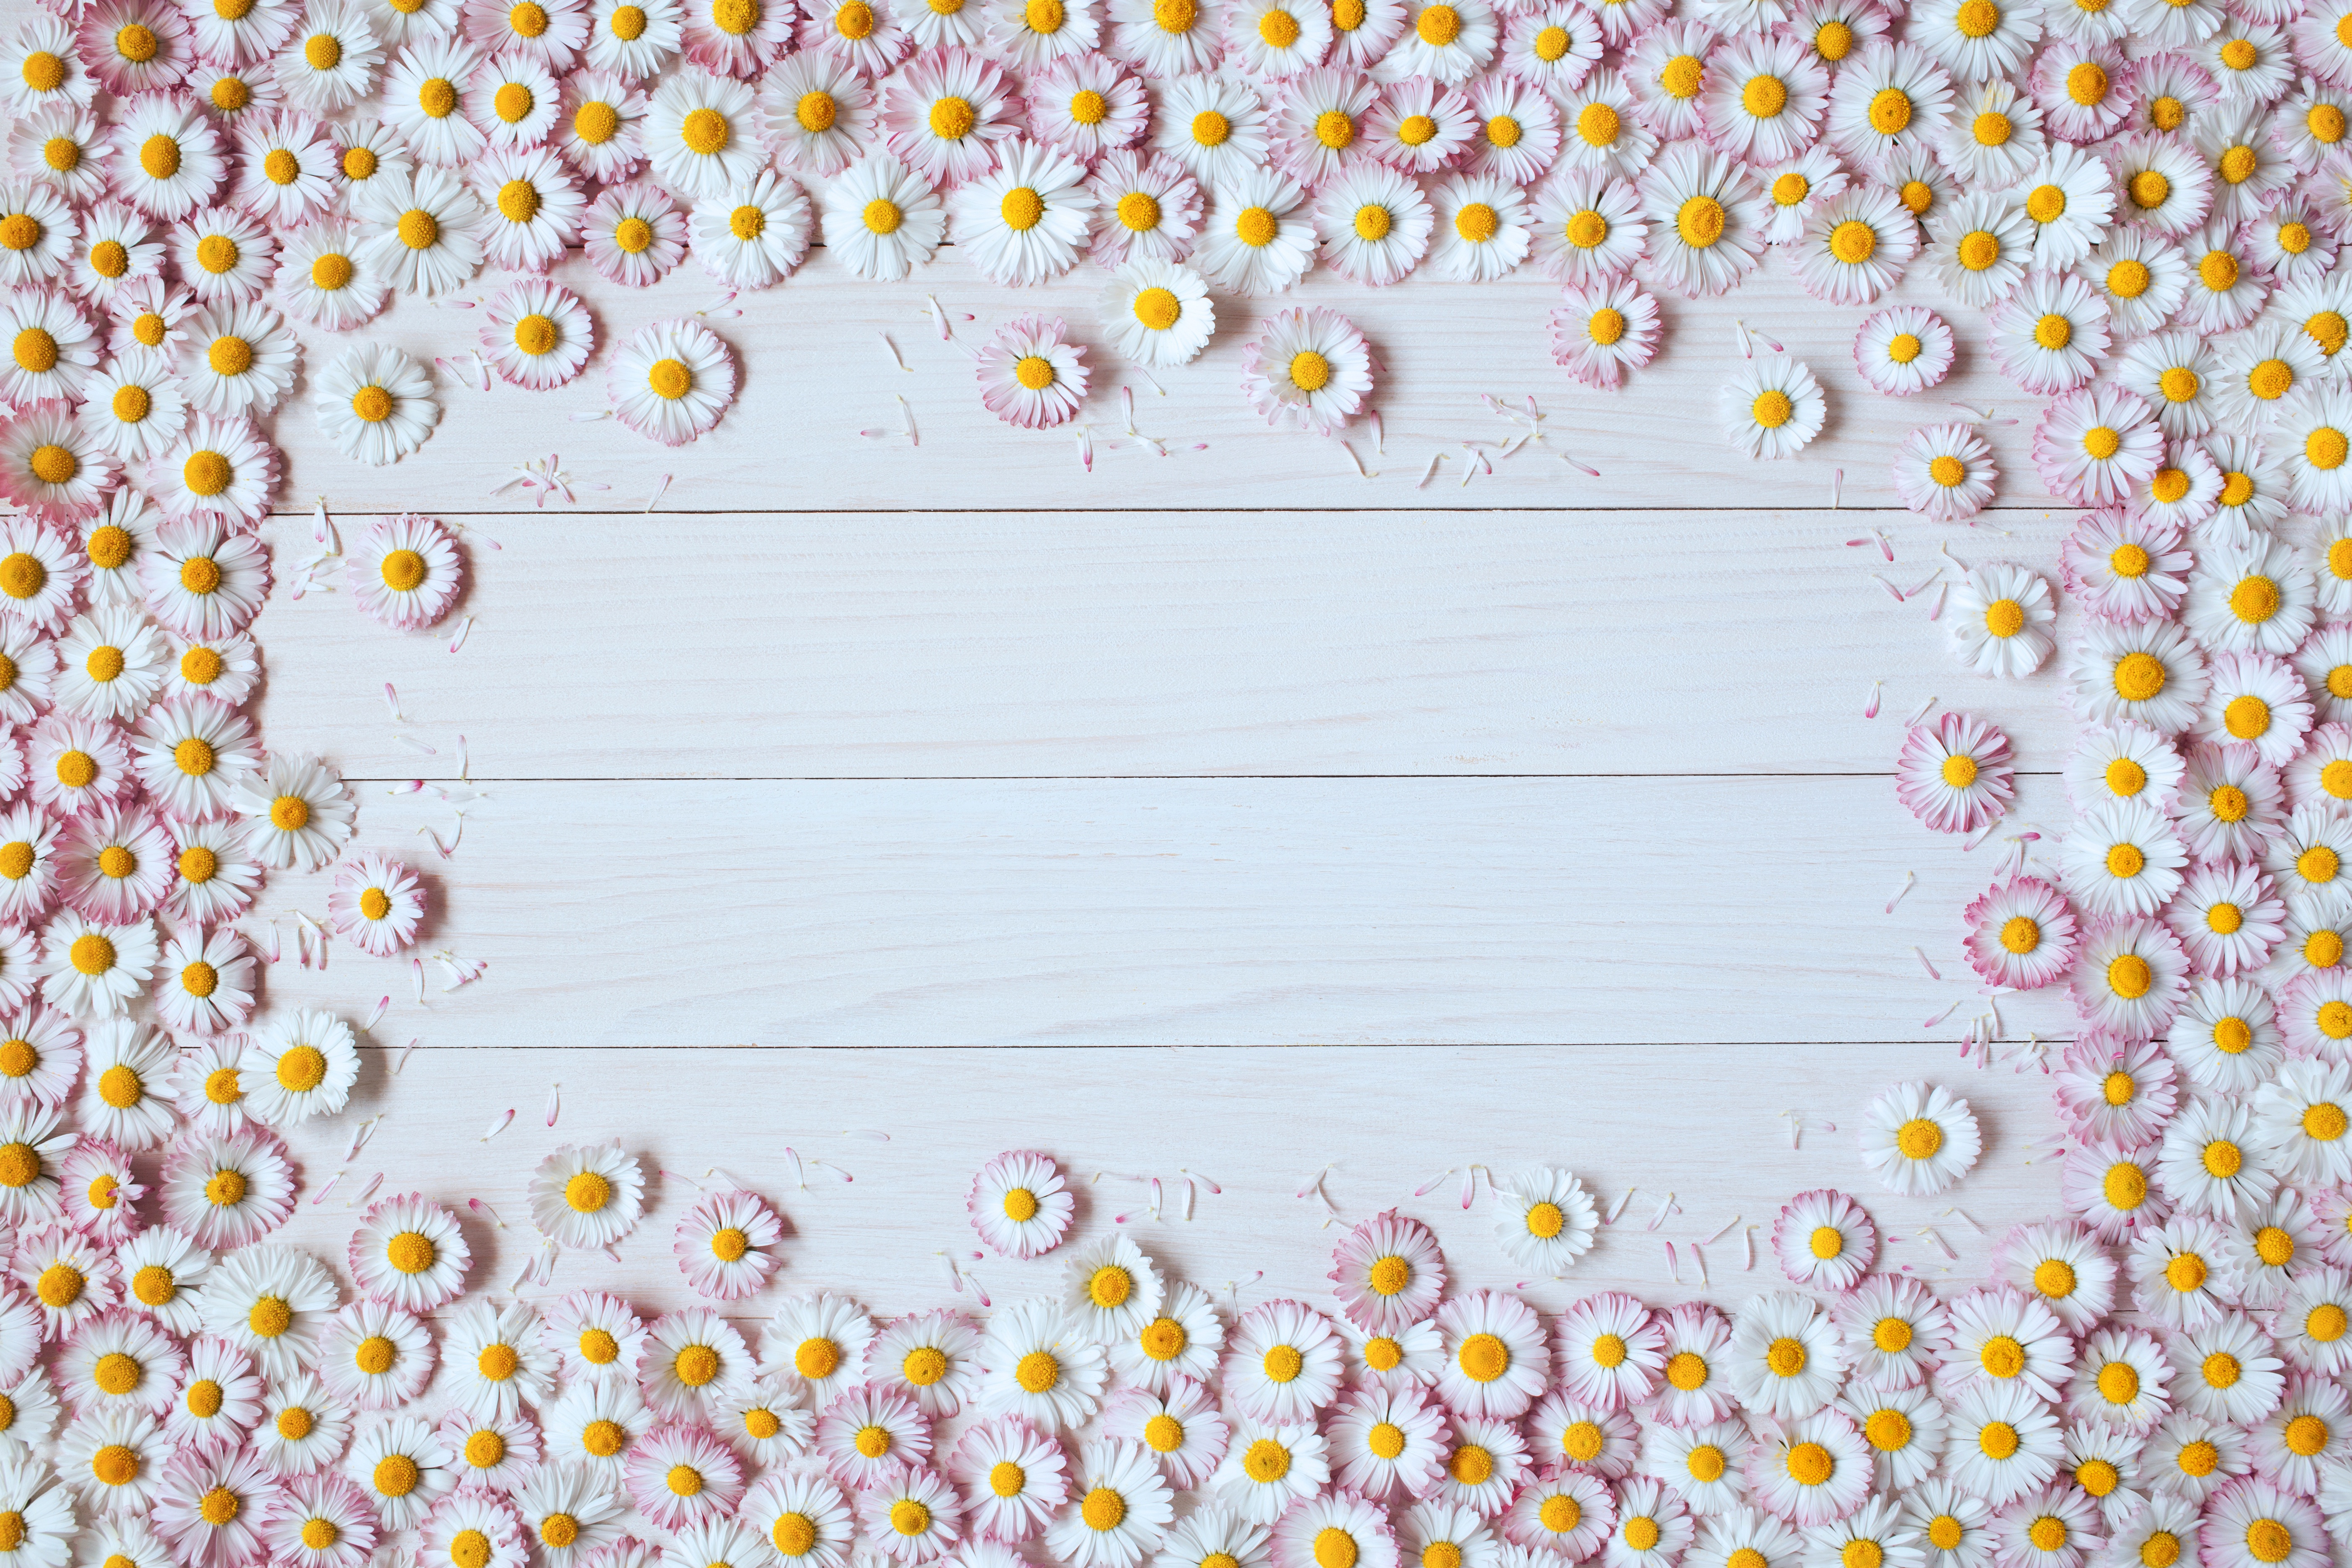 GoodFon.com - Free Wallpapers, download. flowers, Board, chrysanthemum. 